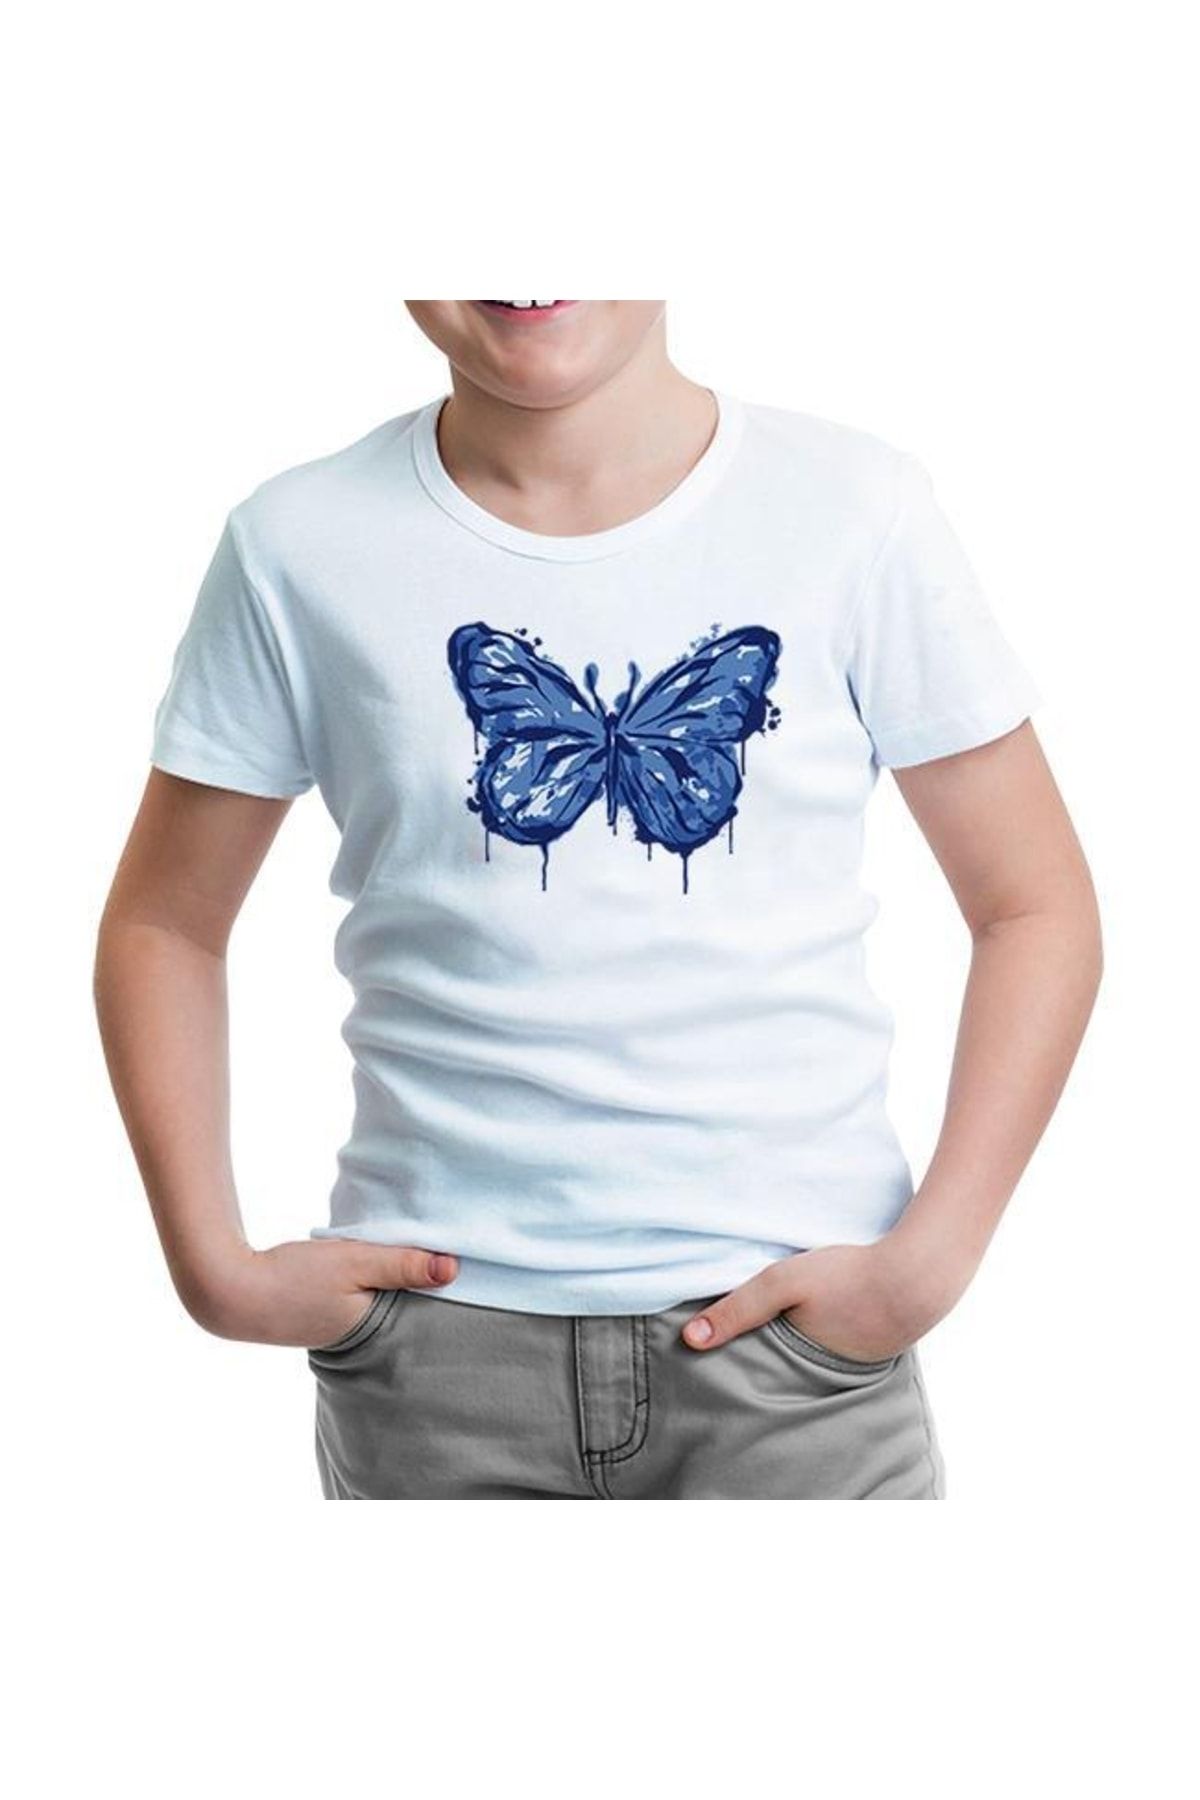 Lord T-Shirt Beautiful Blue Butterfly Beyaz Çocuk Tshirt